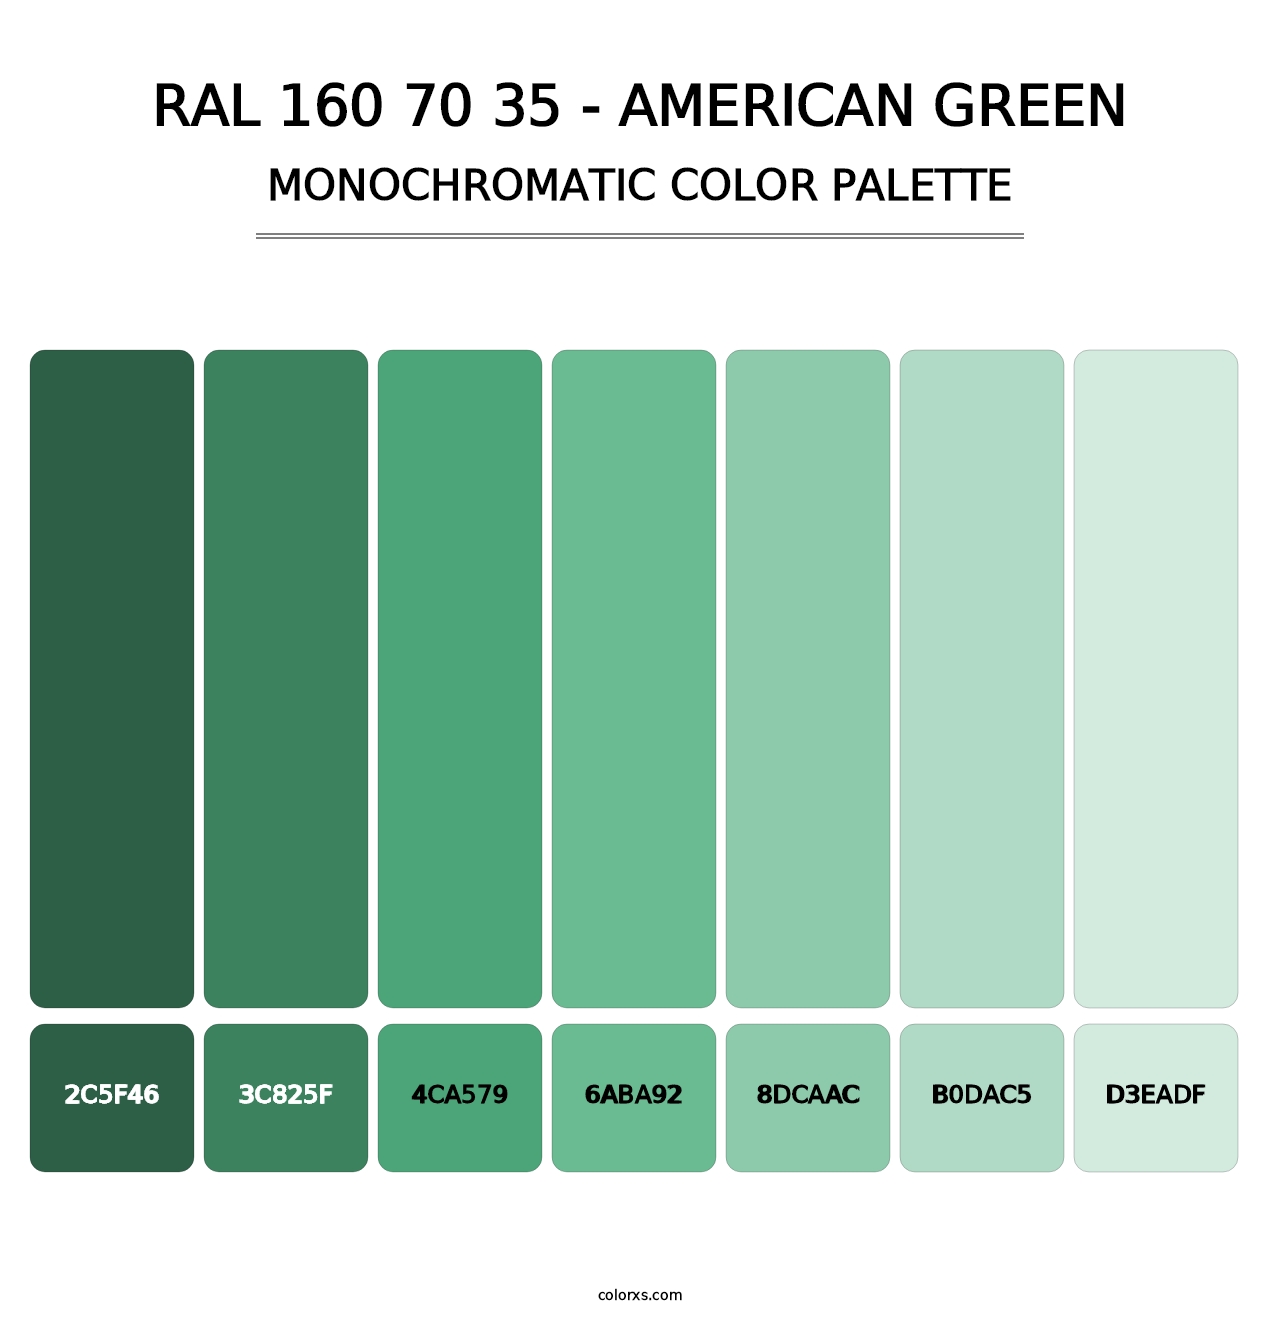 RAL 160 70 35 - American Green - Monochromatic Color Palette